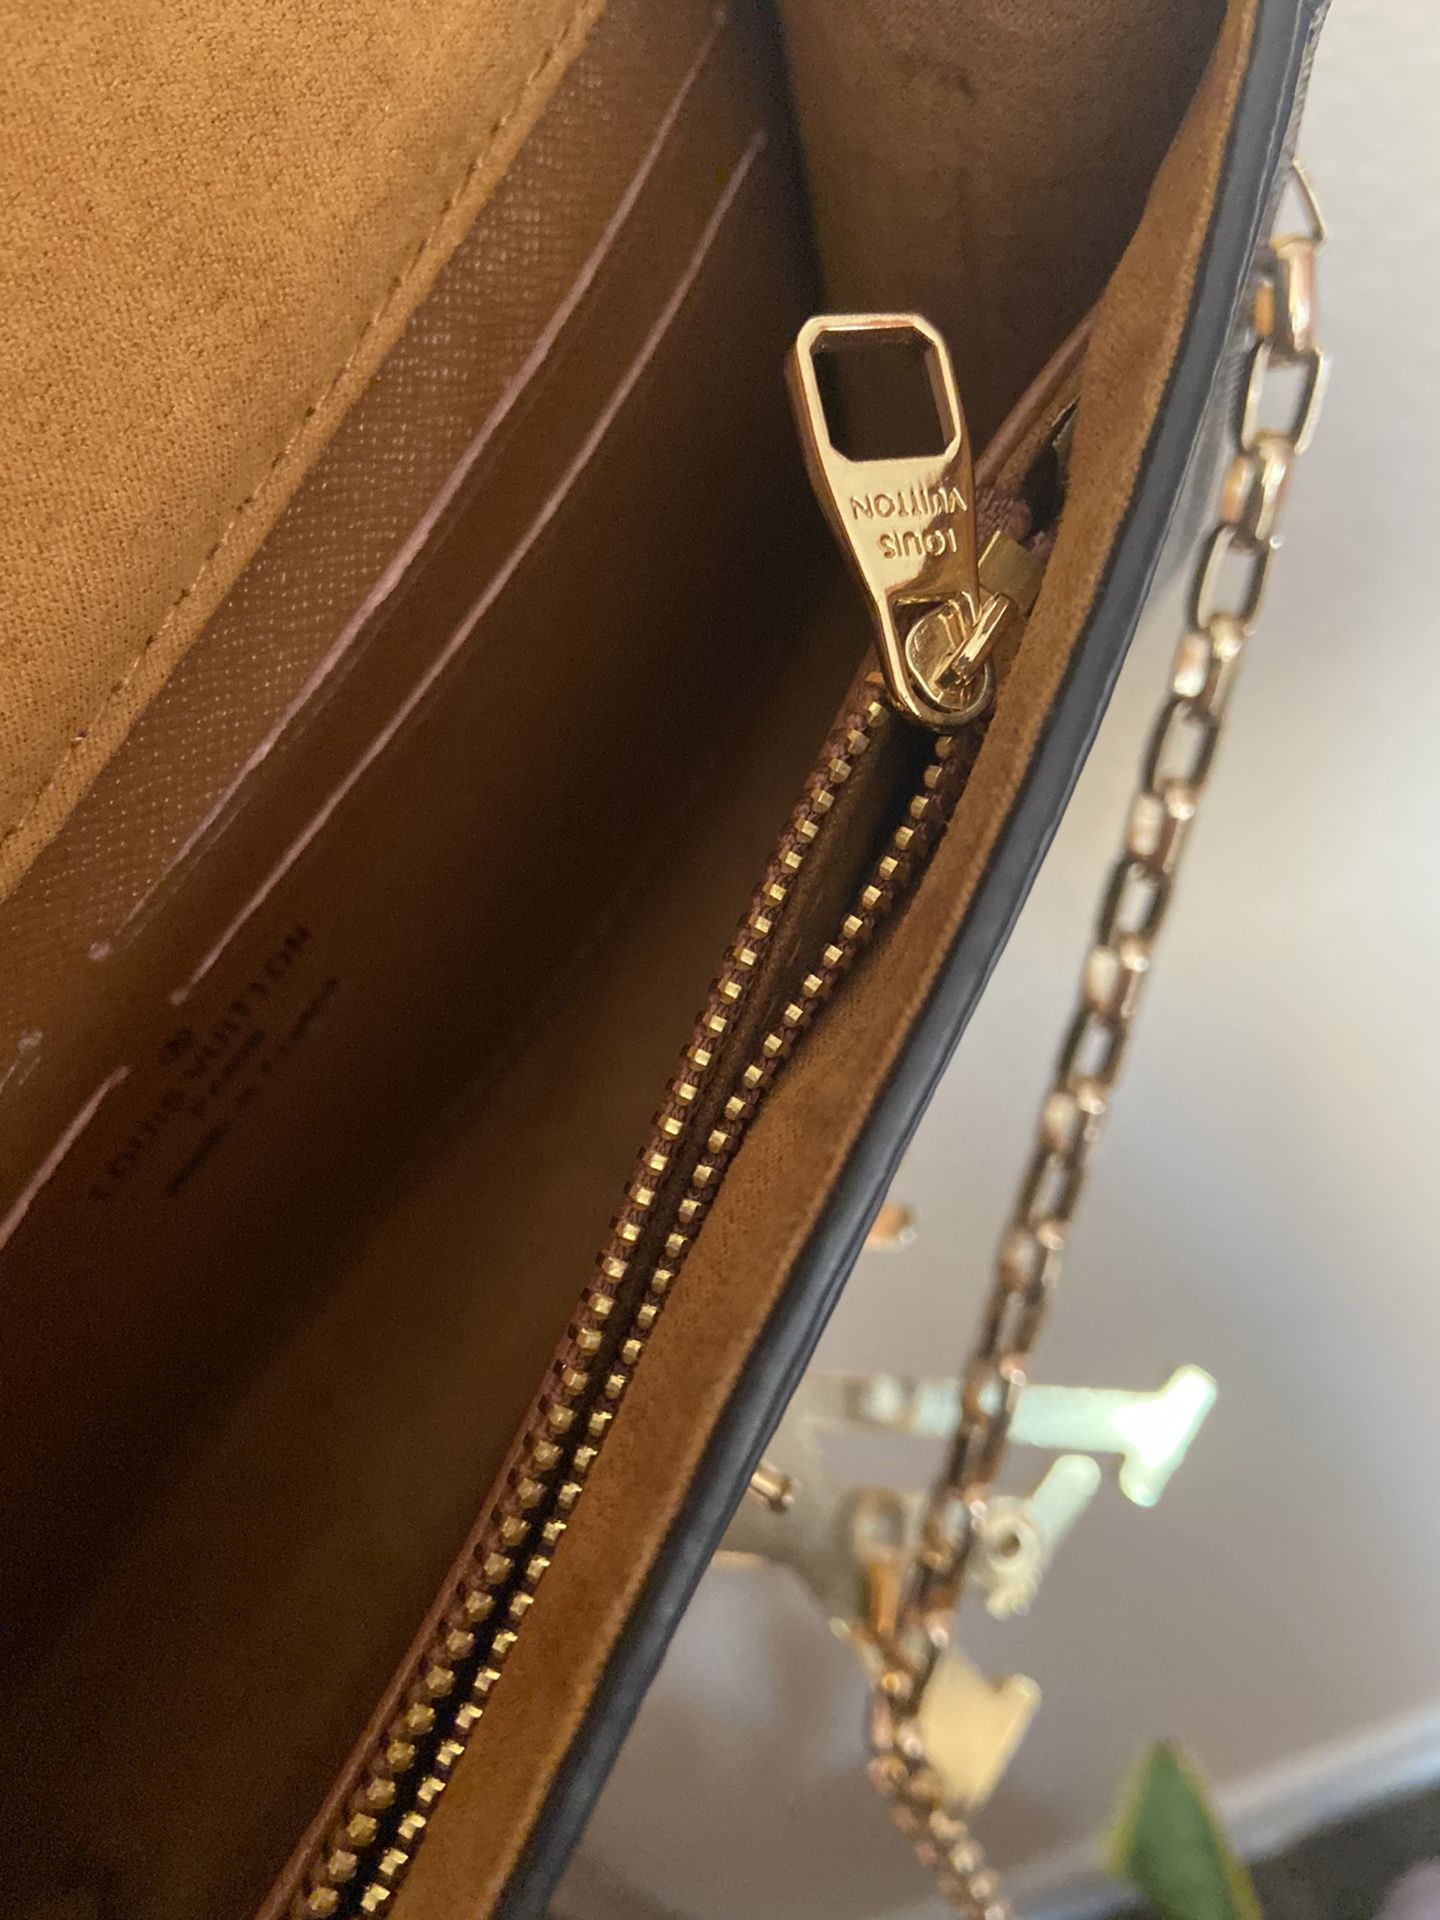 Louis Vuitton Pm 2 Way Clutch Bag Monogram for Sale in Modesto